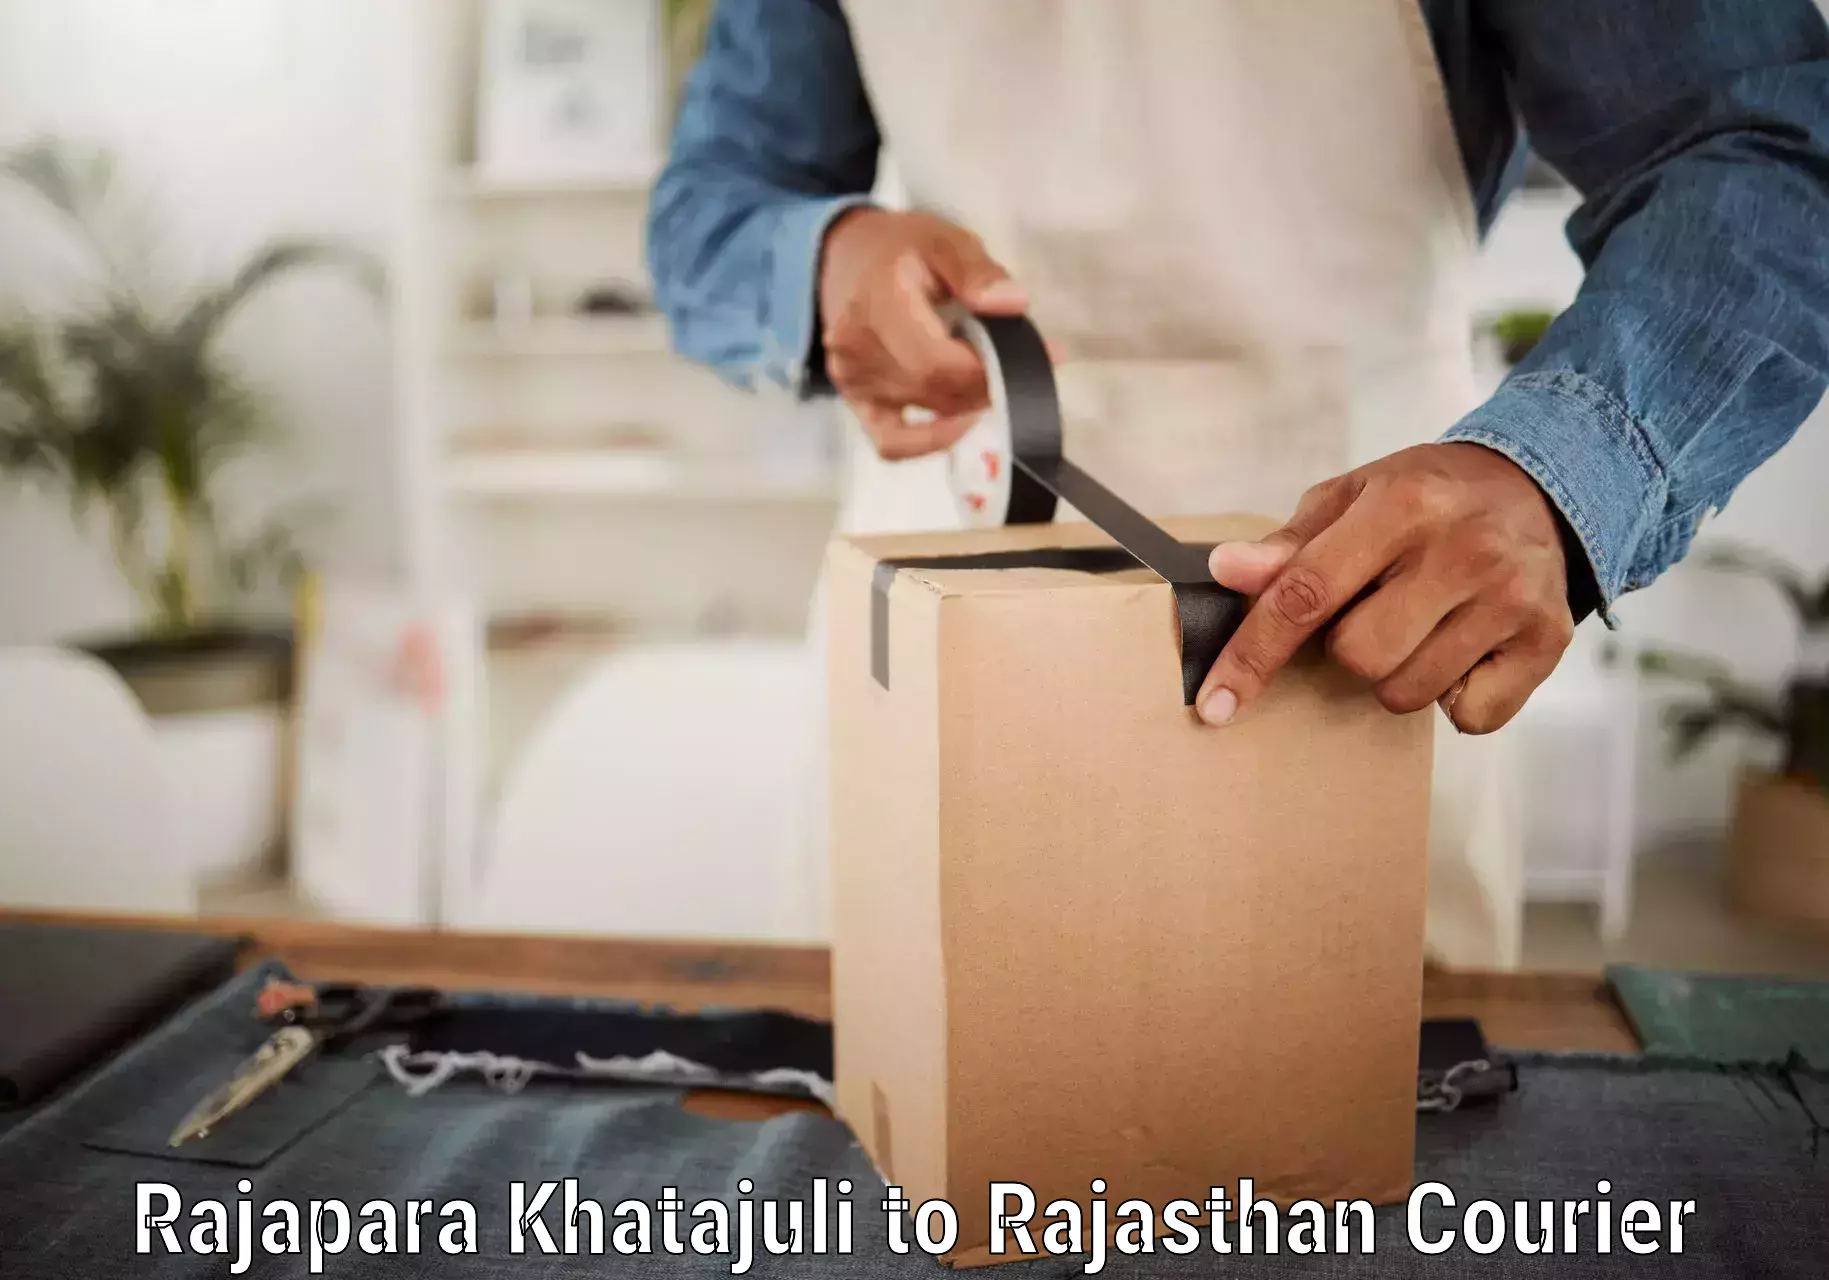 End-to-end delivery Rajapara Khatajuli to Nainwa